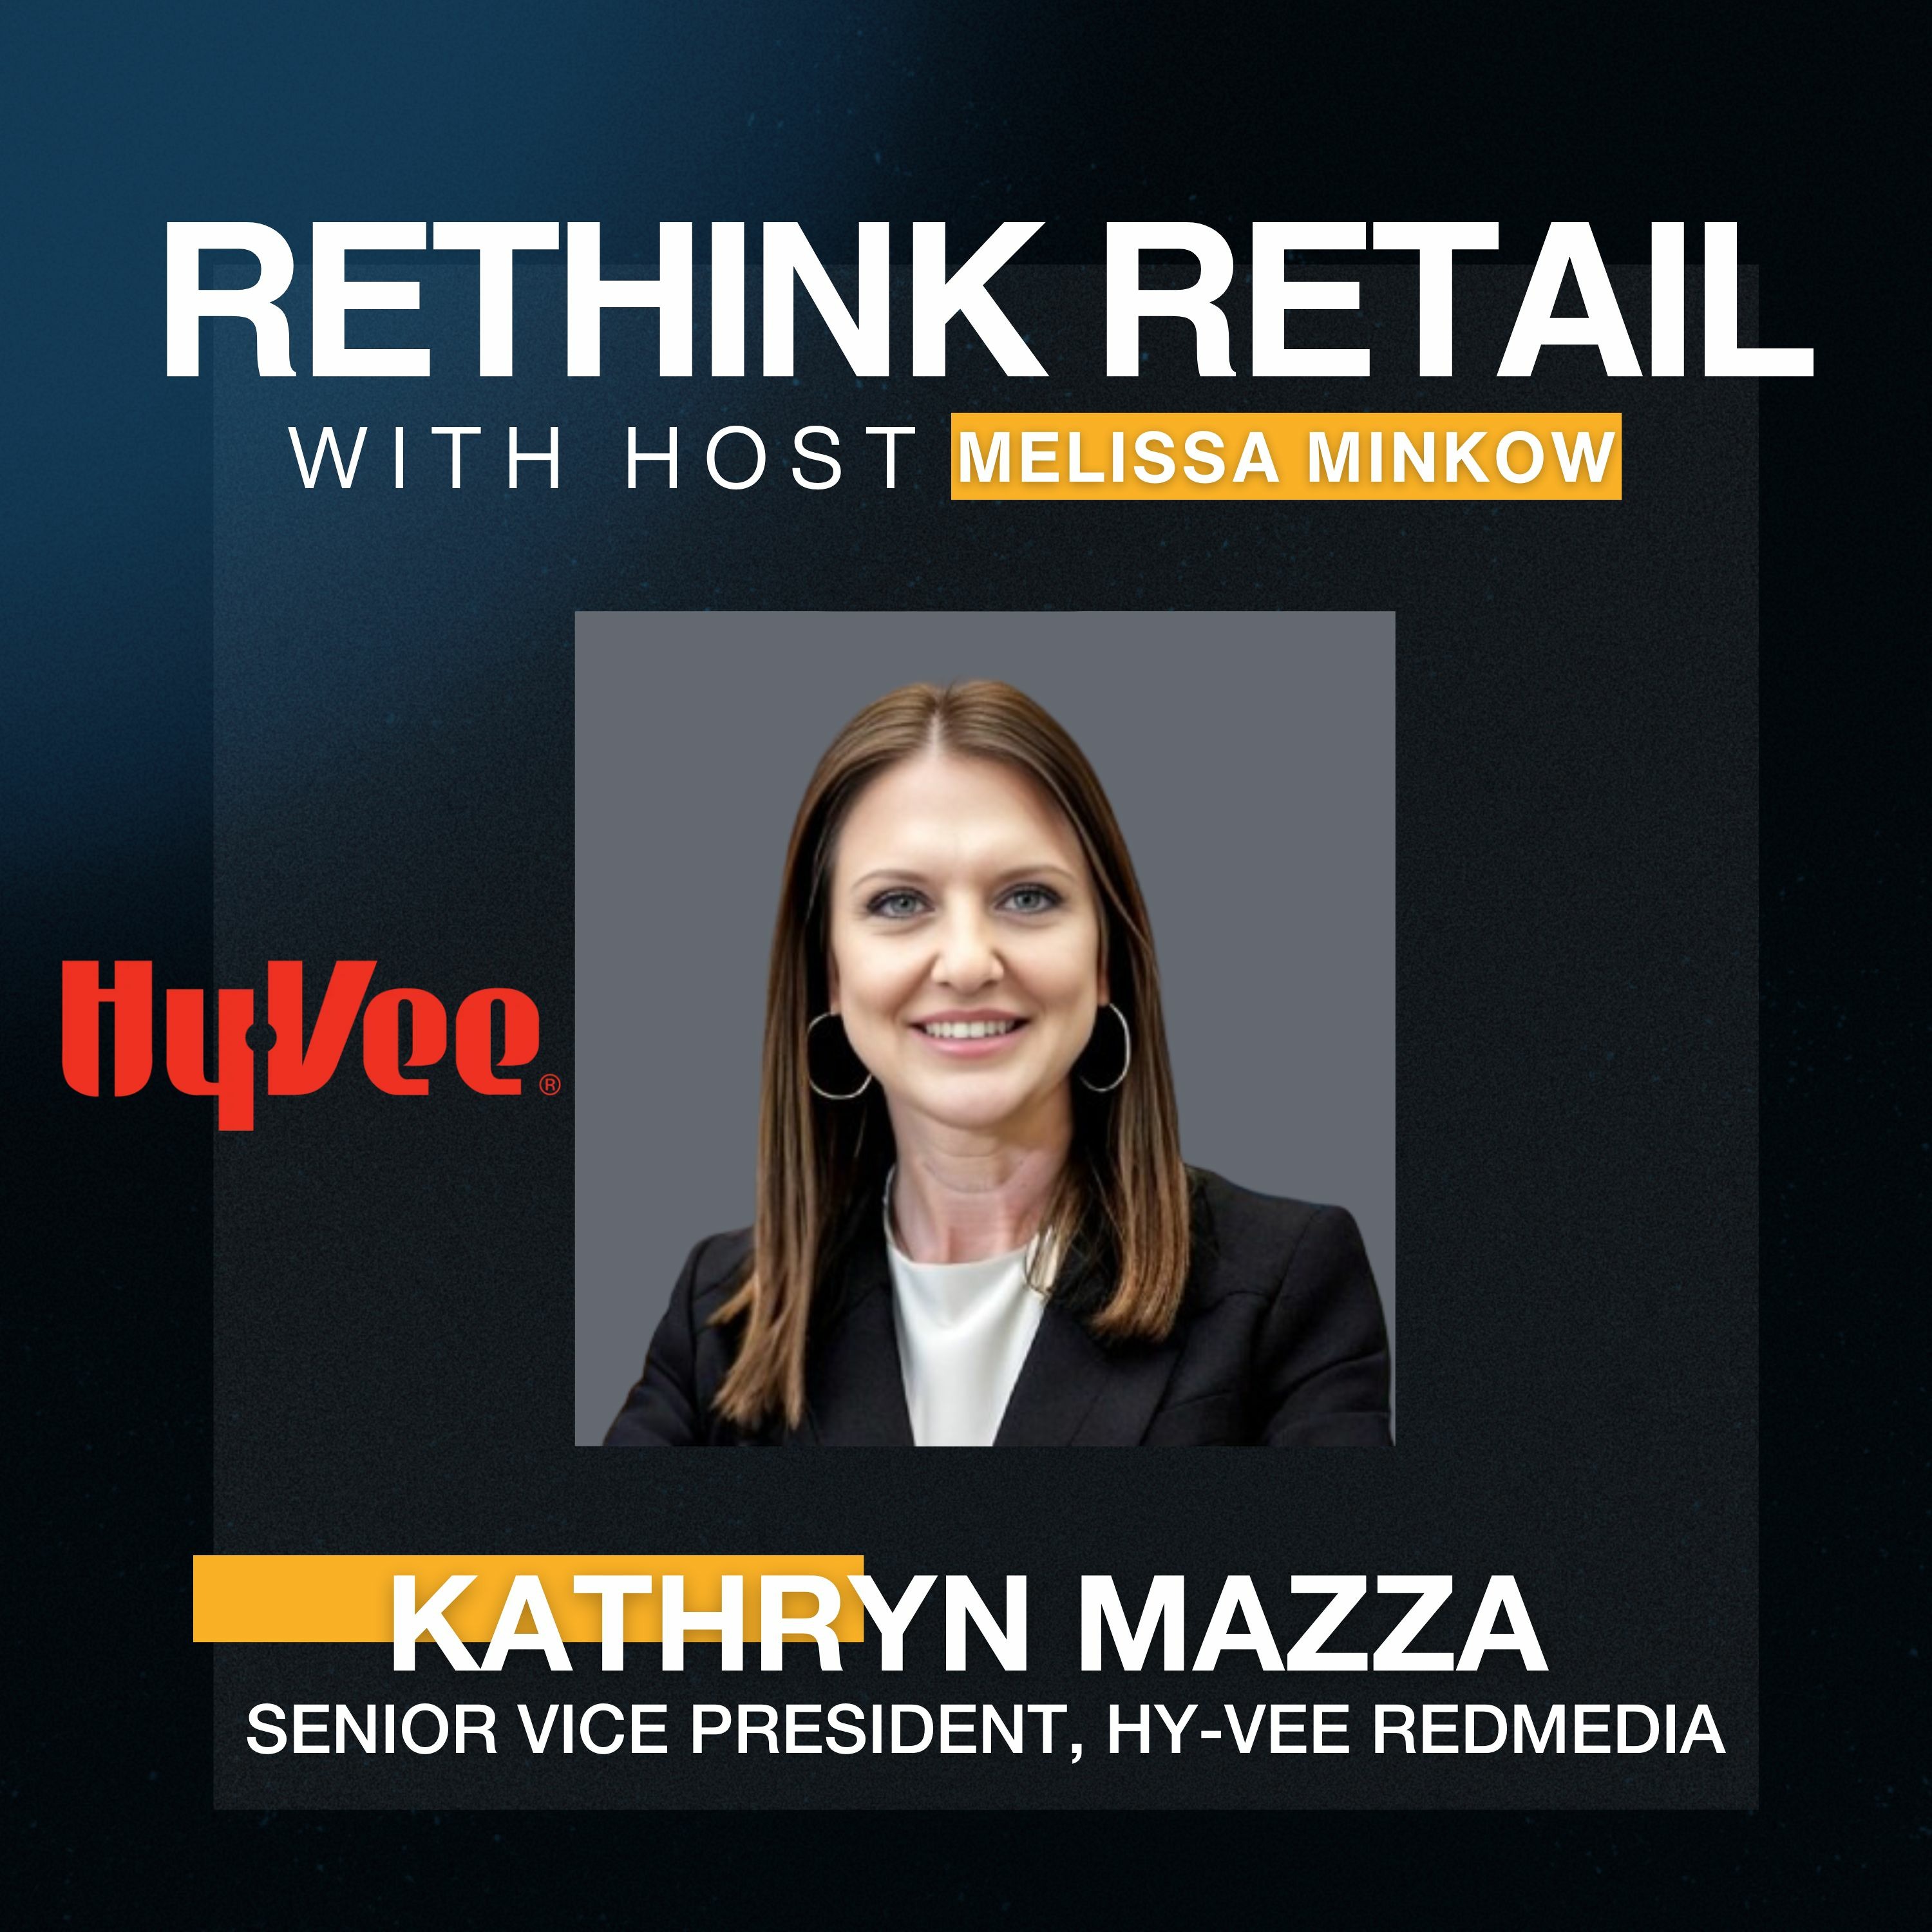 Kathryn Mazza, Senior Vice President at Hy-Vee RedMedia